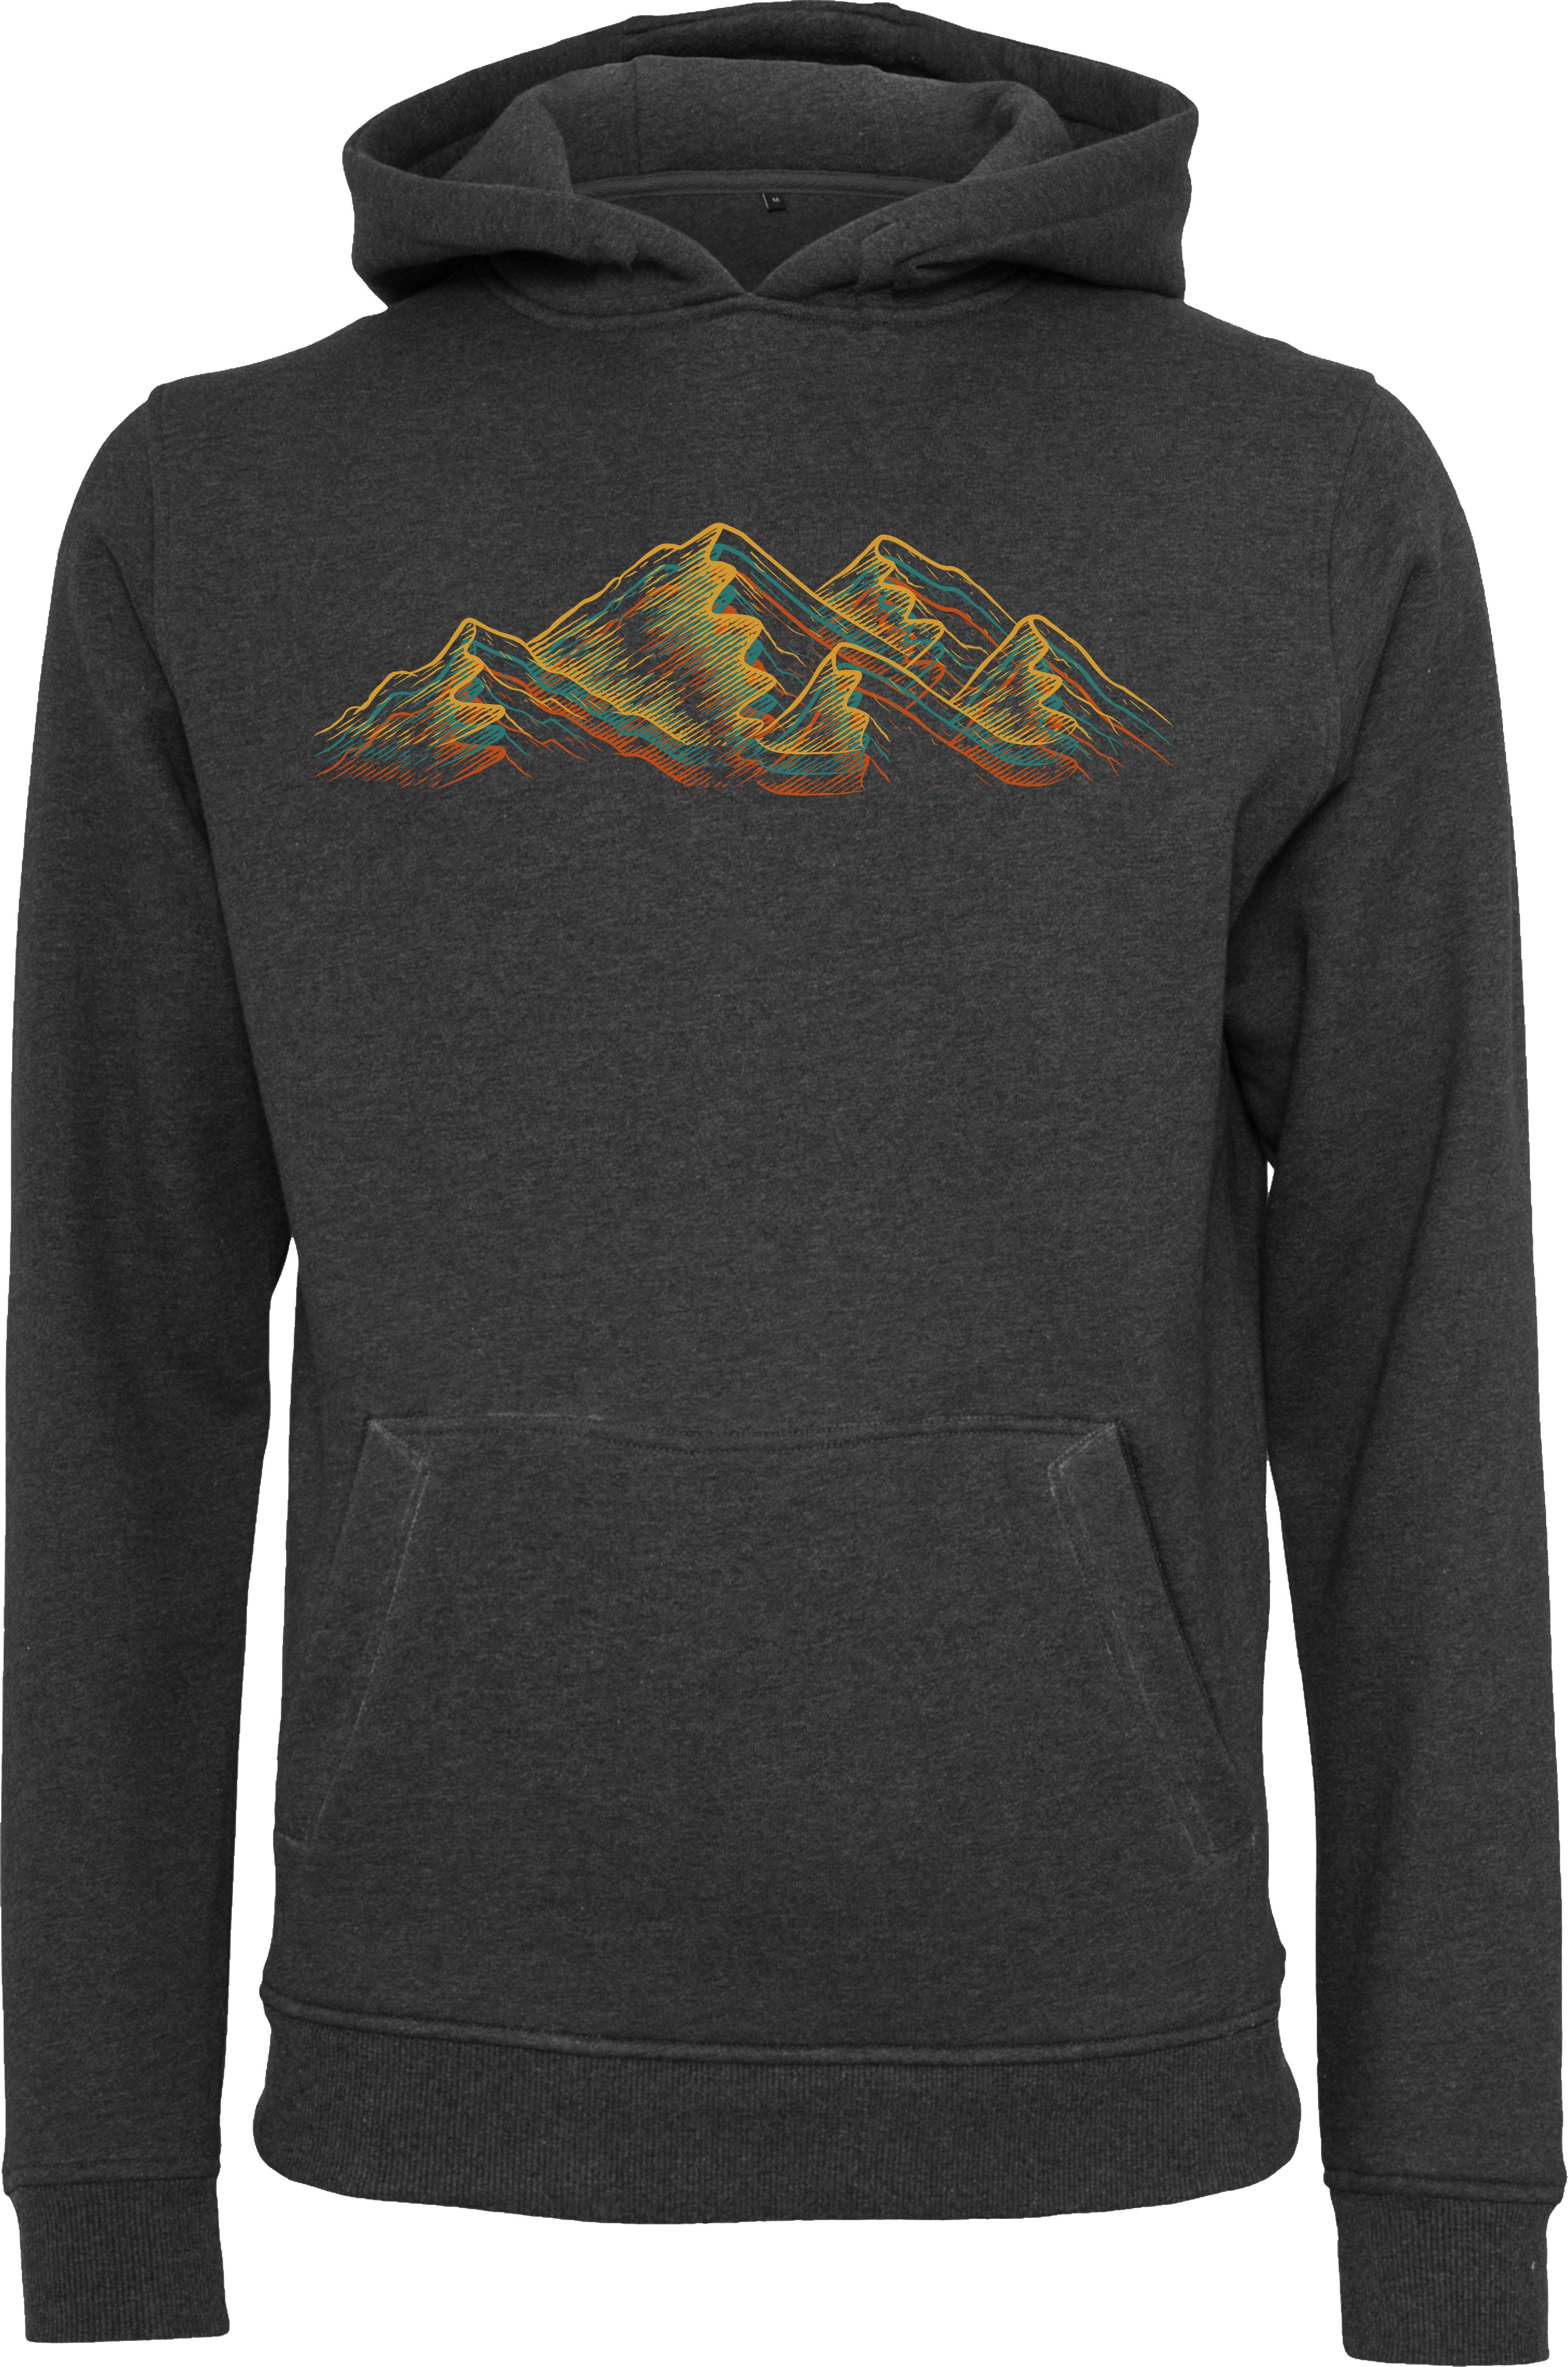 hochwertiger Siebdruck Kapuzenpullover - Kletter Alpen Charcoal : Hoodie Wandern Baddery Kleidung